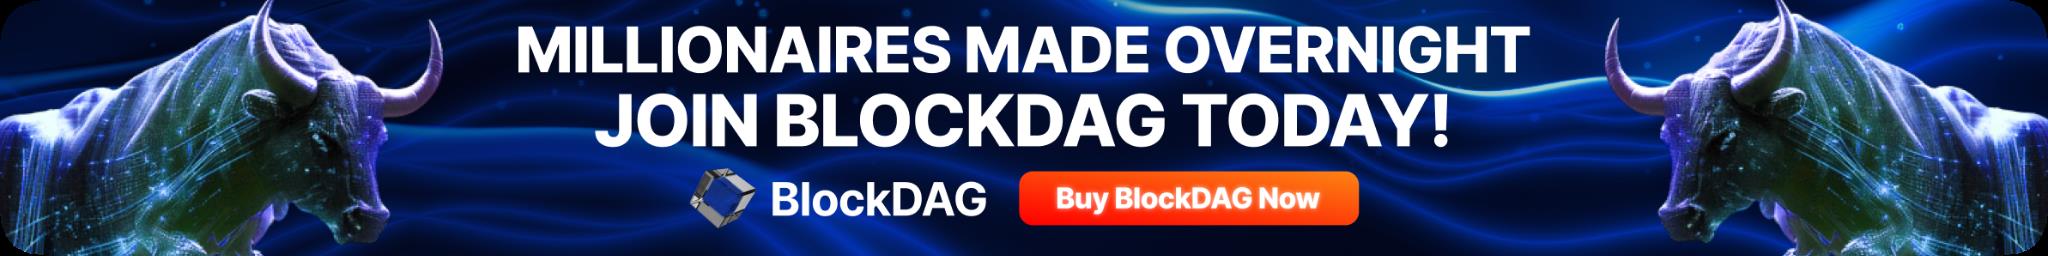 BlockDAG PR-3